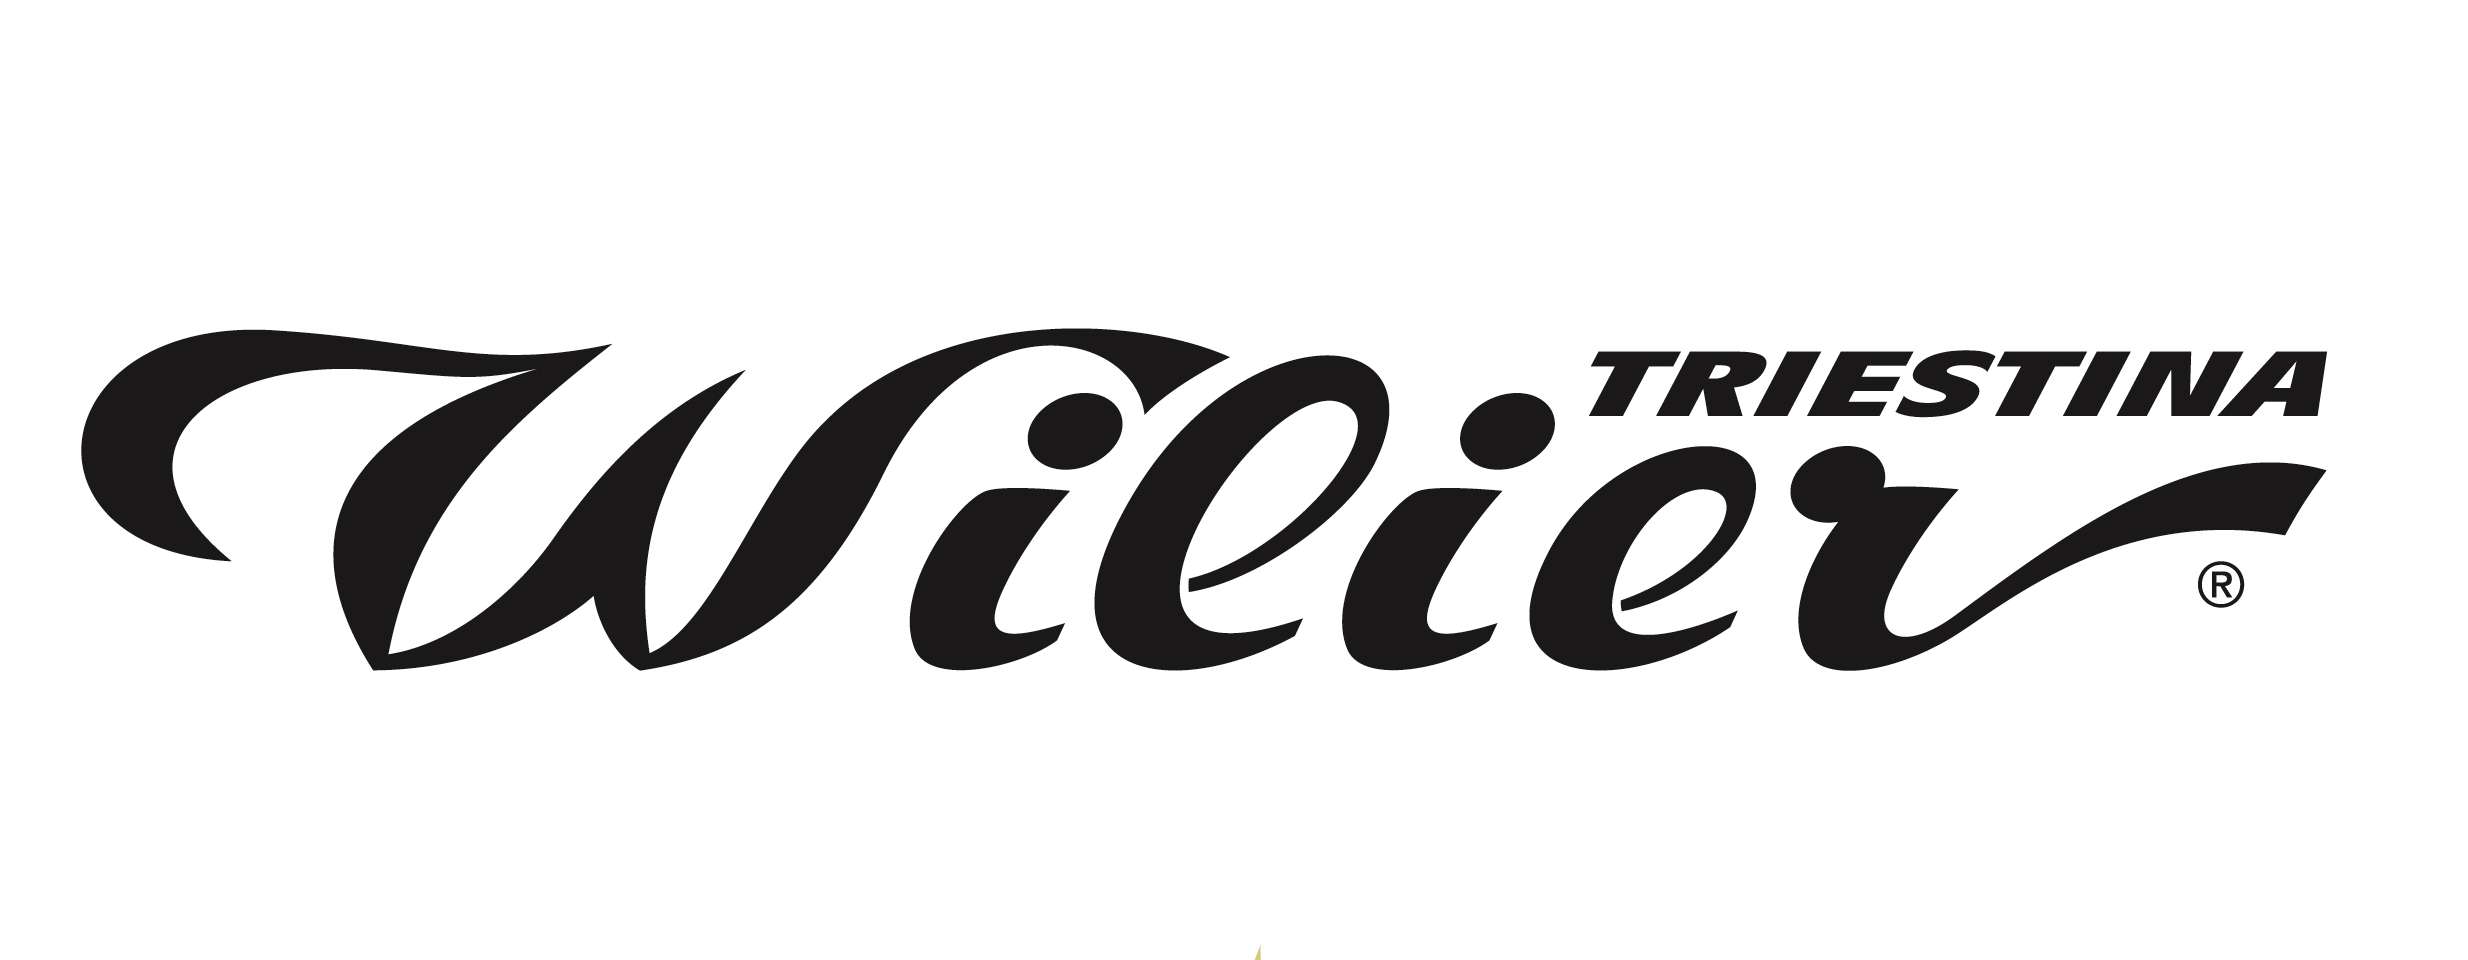 Bicycle Company Logo - Bike company names and Logos